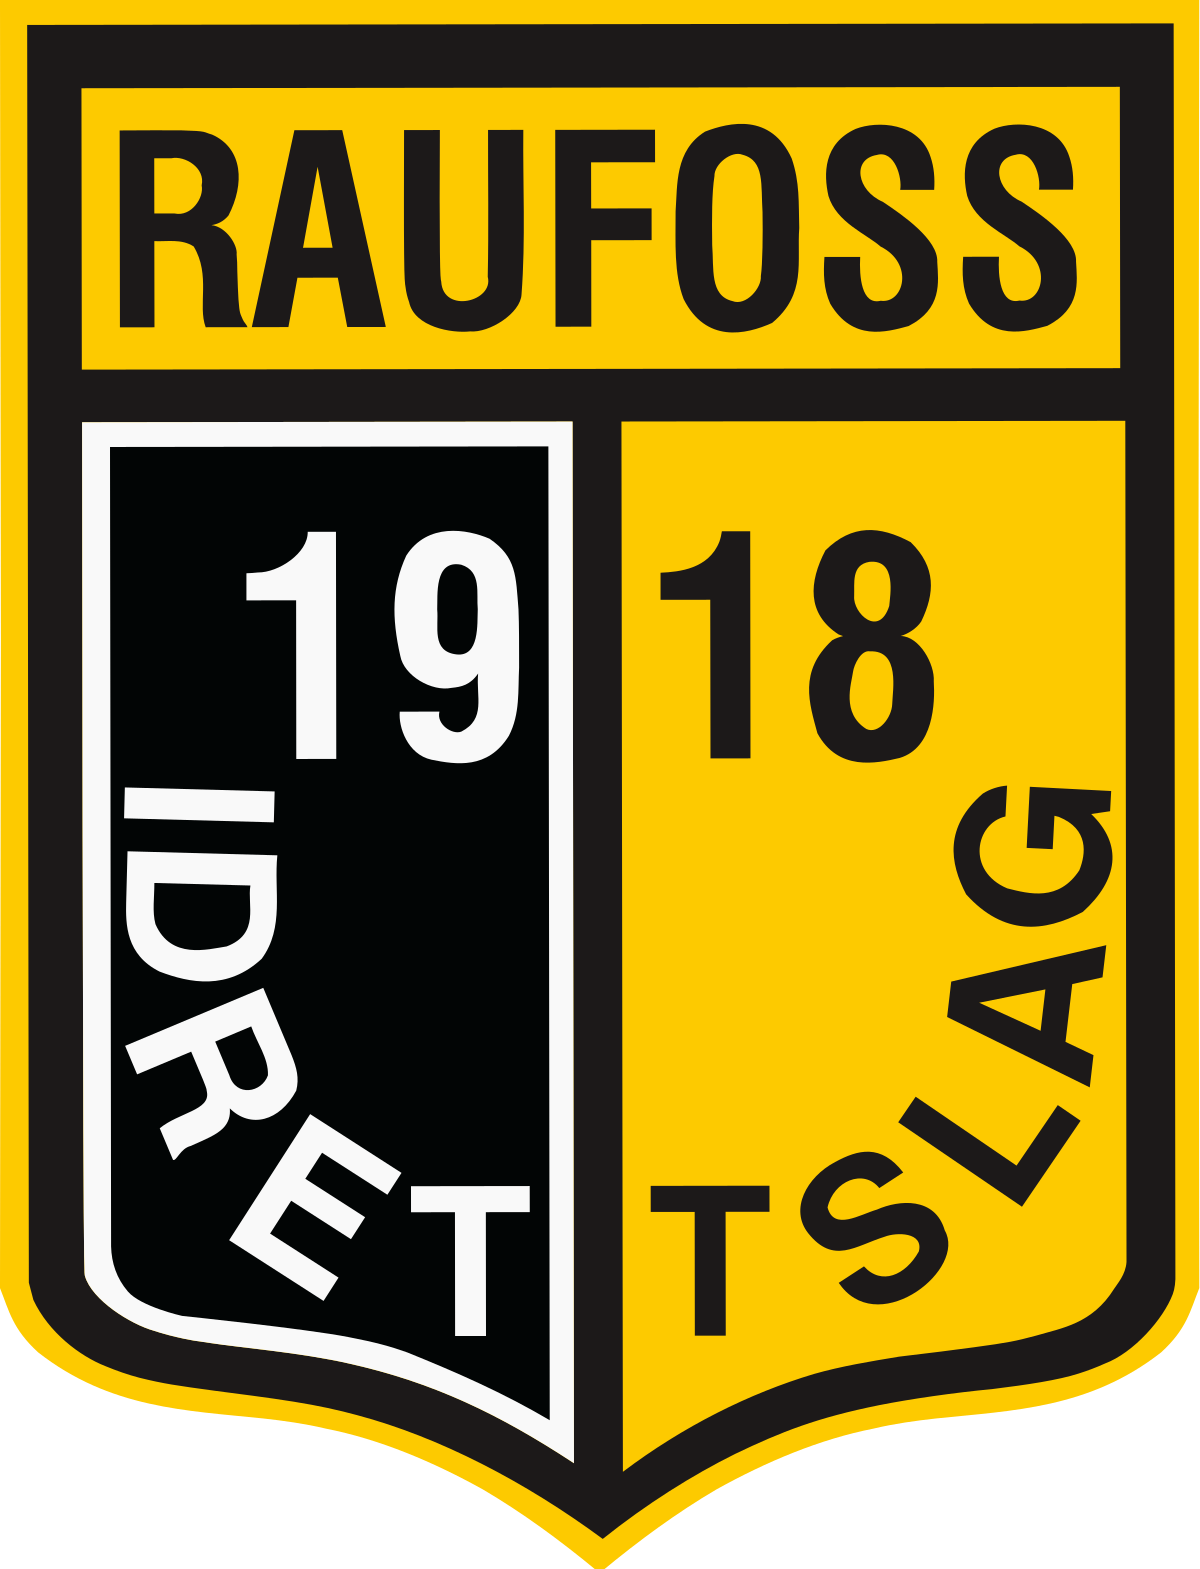 Raufoss W logo